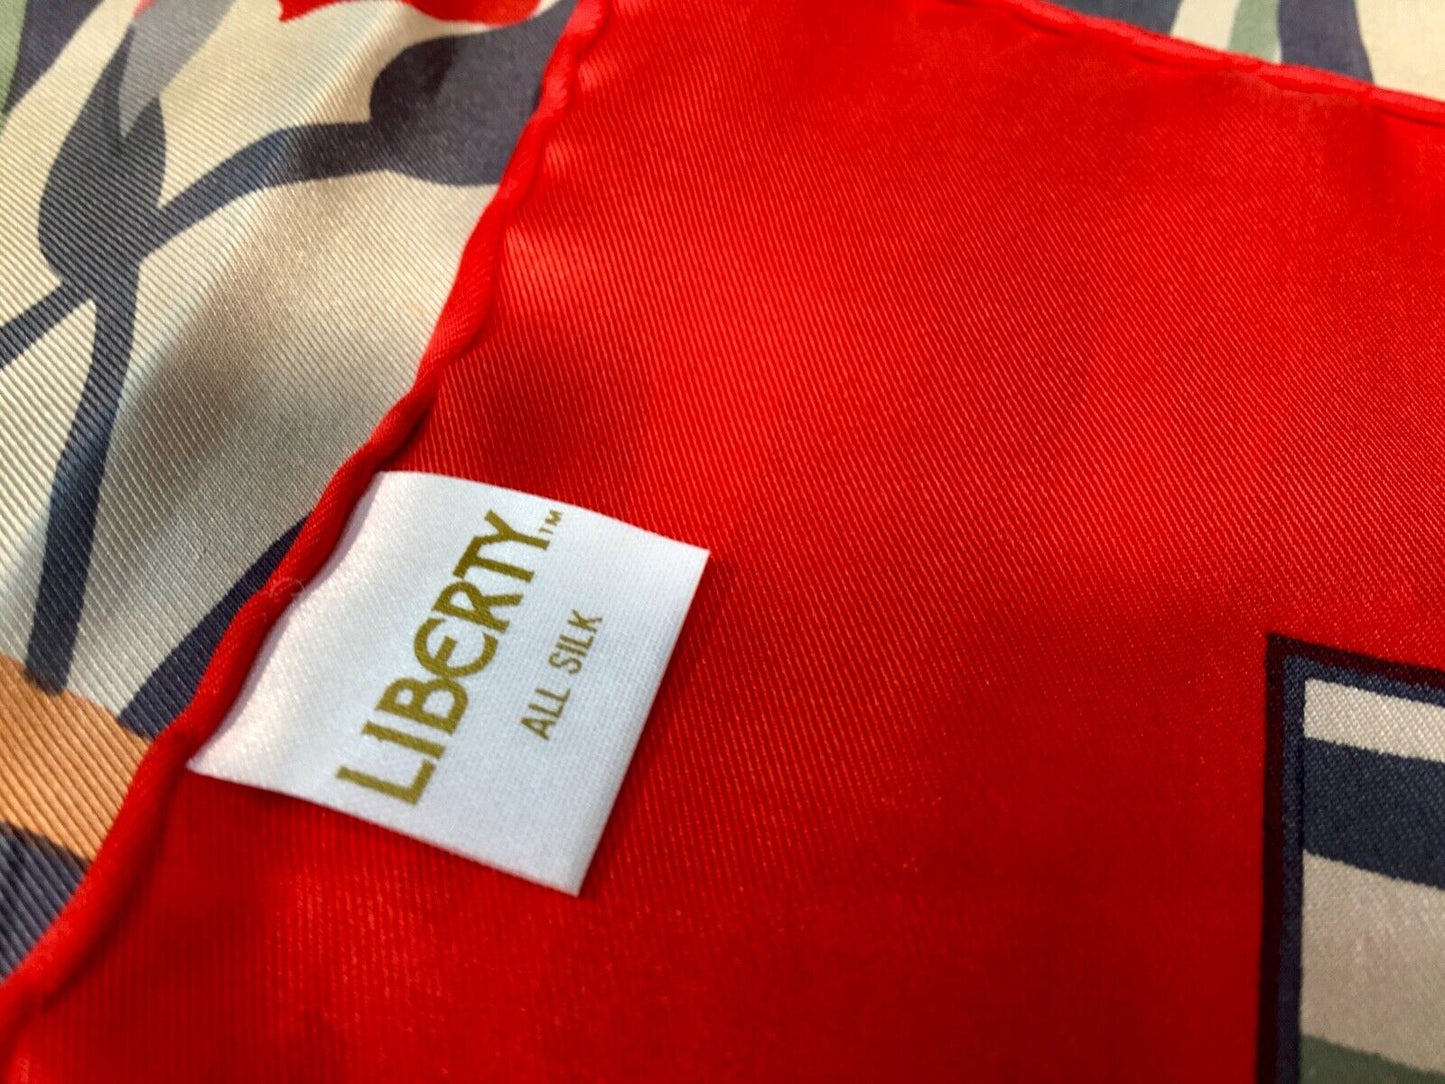 Liberty & Co London Silk Ladies Scarf / Floral / Multicolour / Vintage Clothing